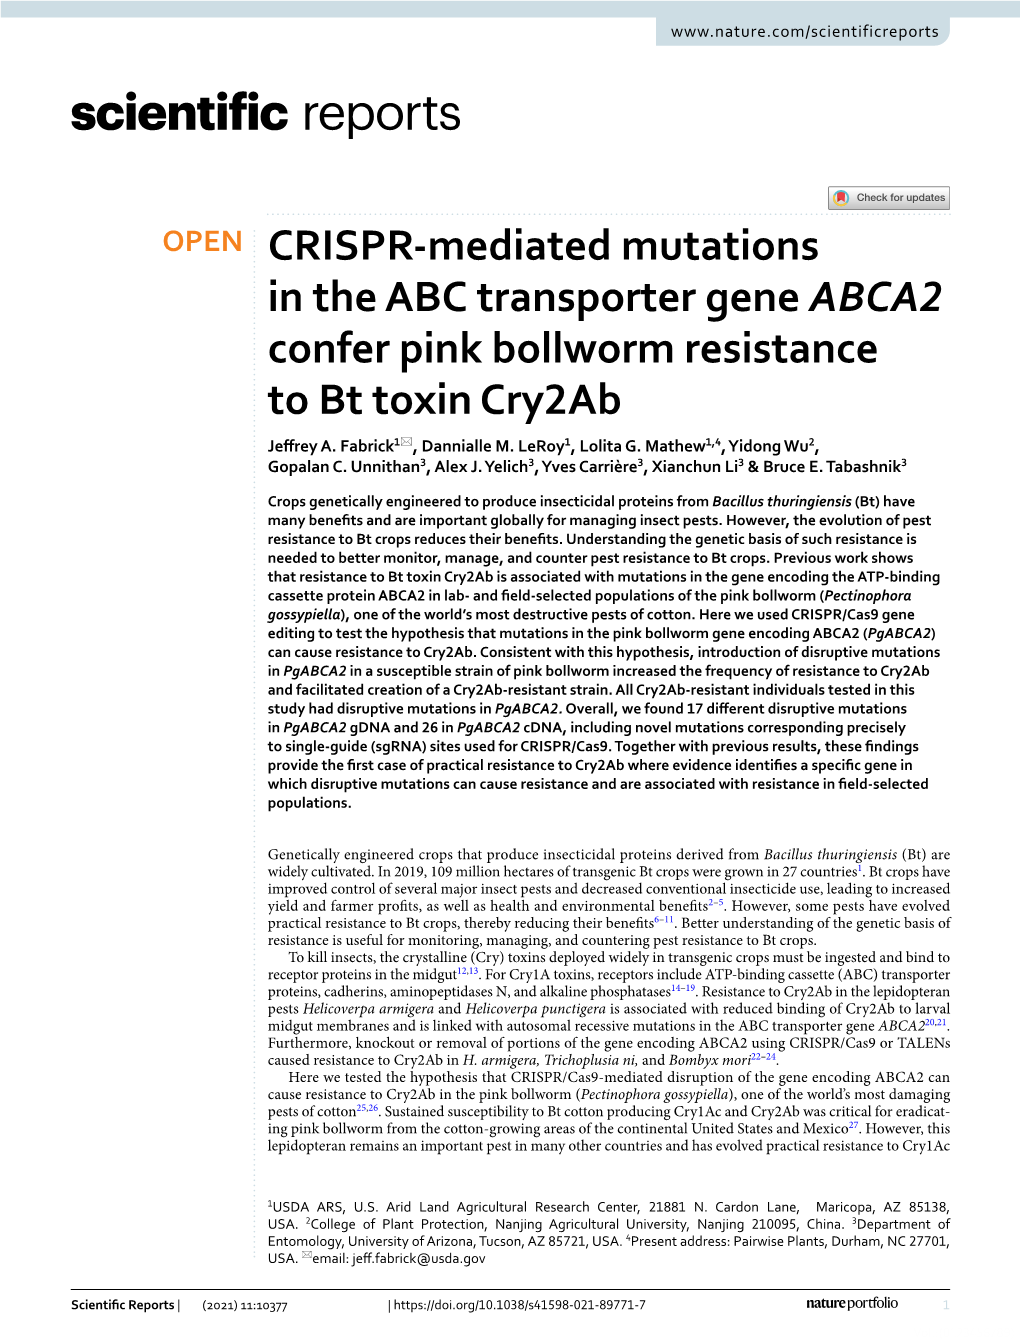 CRISPR-Mediated Mutations in the ABC Transporter Gene ABCA2